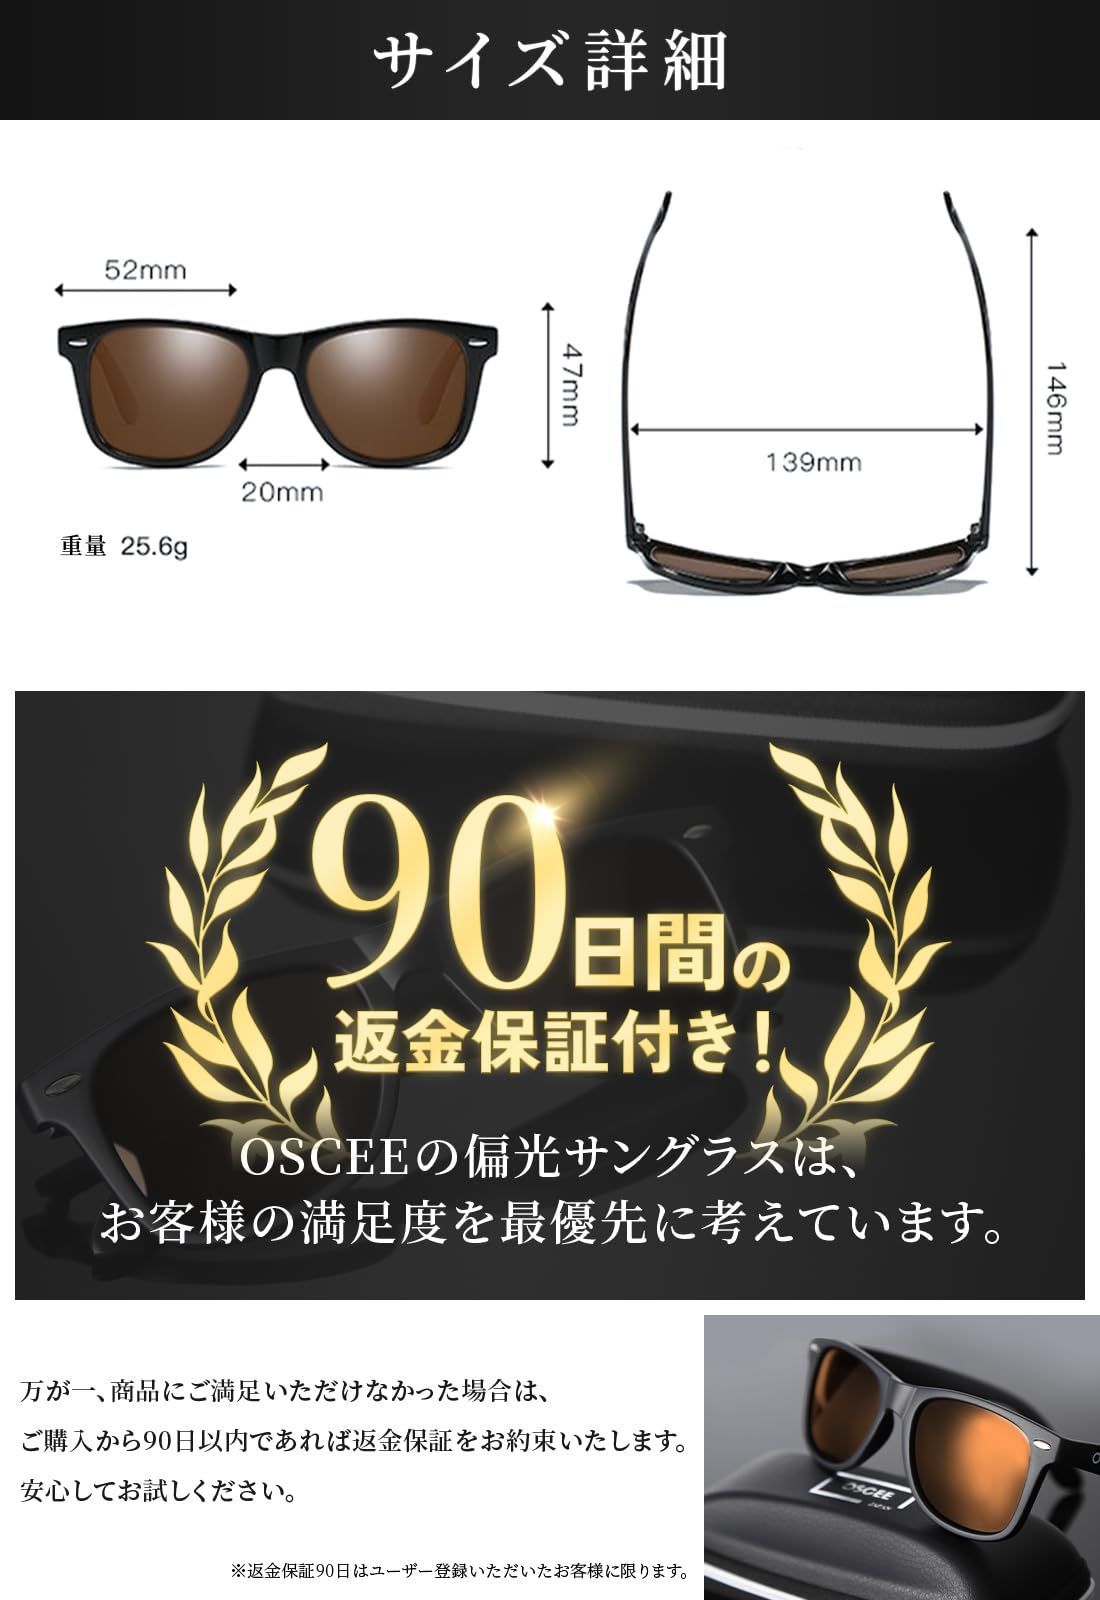 [OSCEE] サングラス メンズ 偏光 ウェリントン型 【眼鏡普及光学器検査協